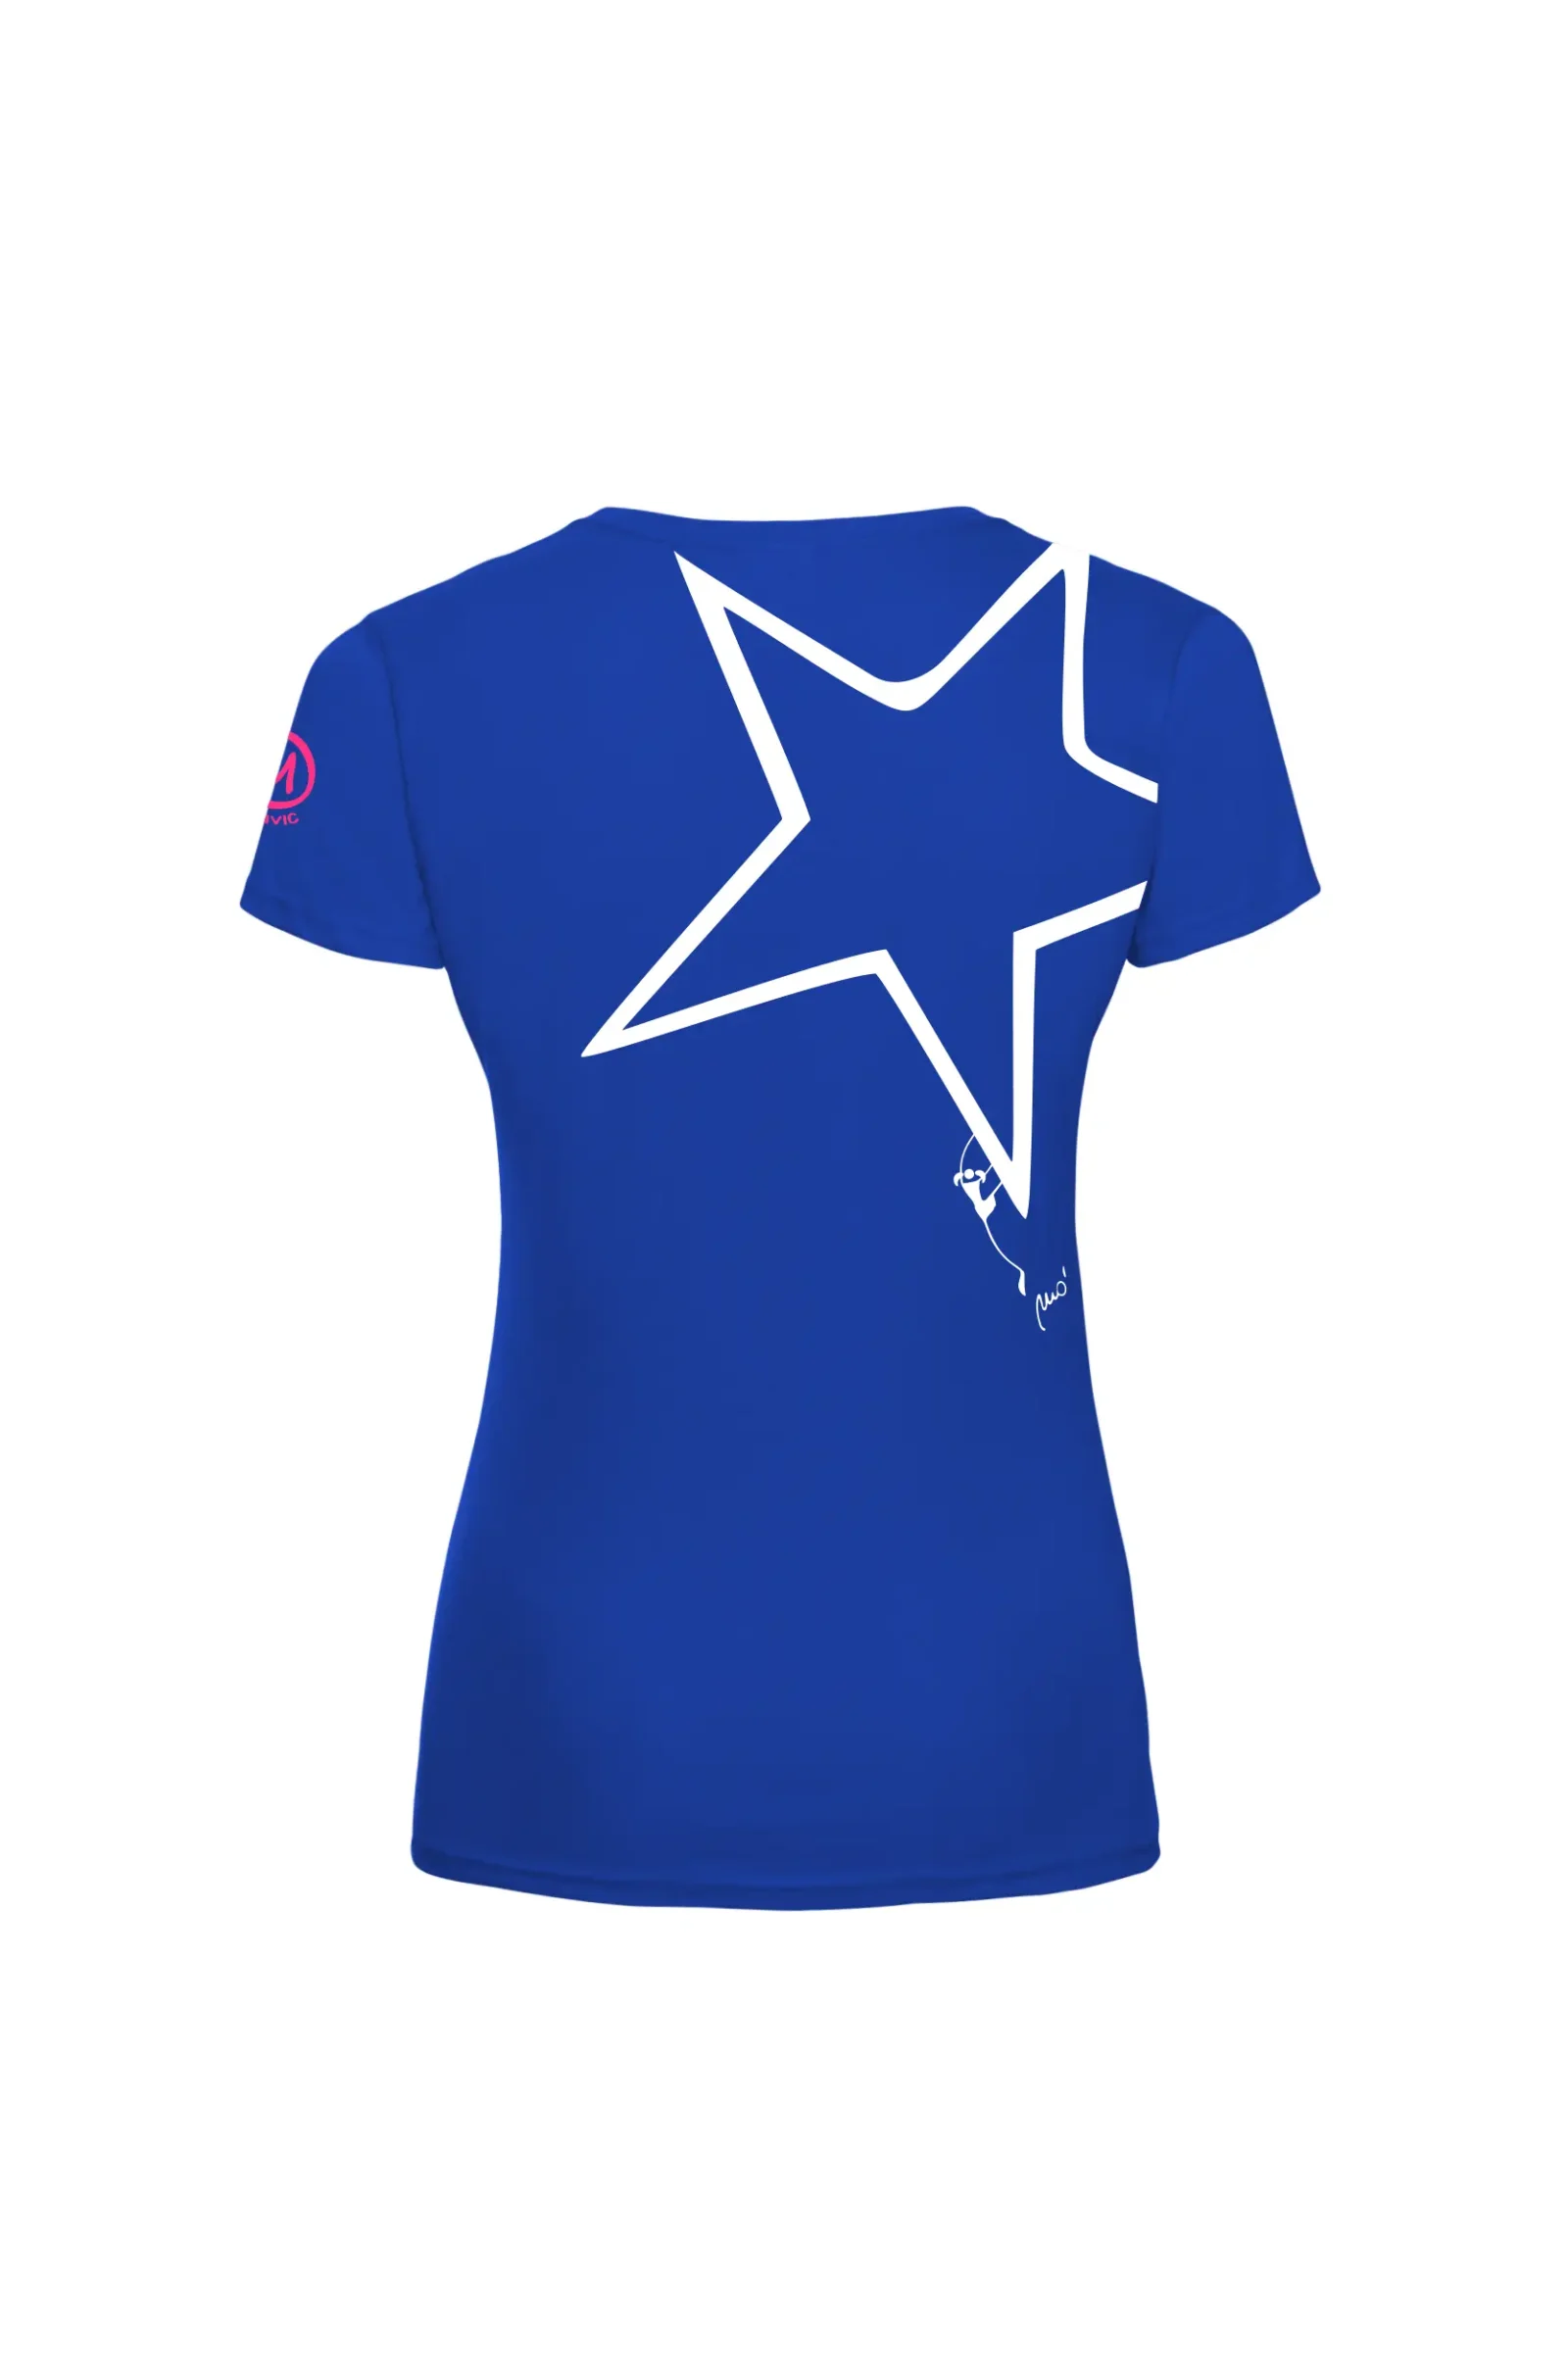 T-shirt escalade femme - coton bleu roi - graphisme "Superstar" -SHARON by MONVIC